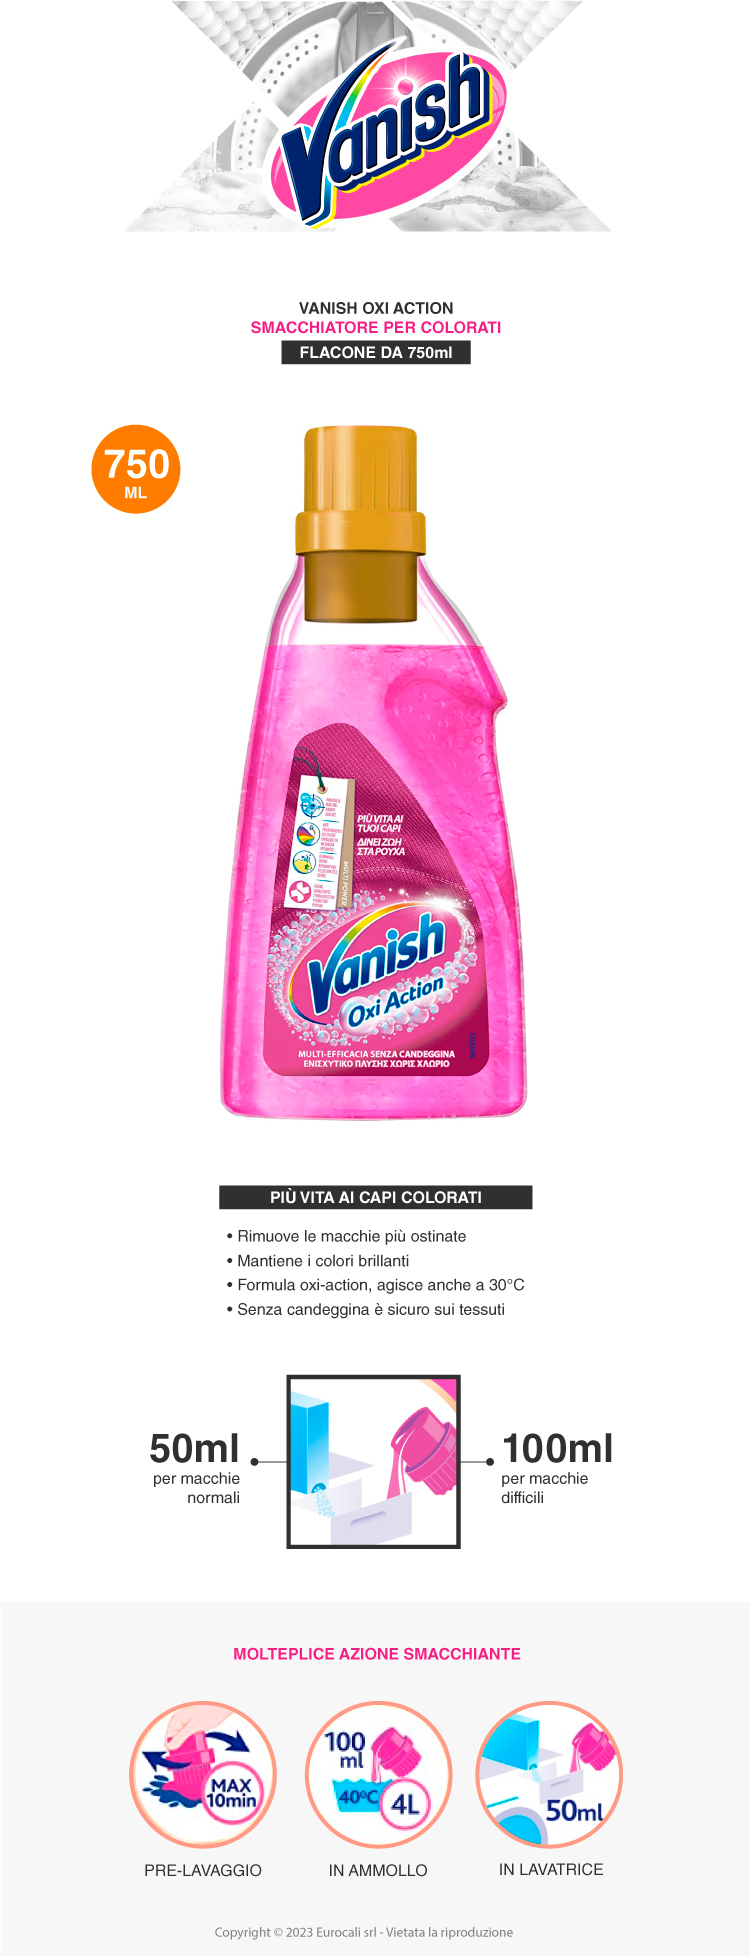 Vanish oxi action rosa gel 750ml